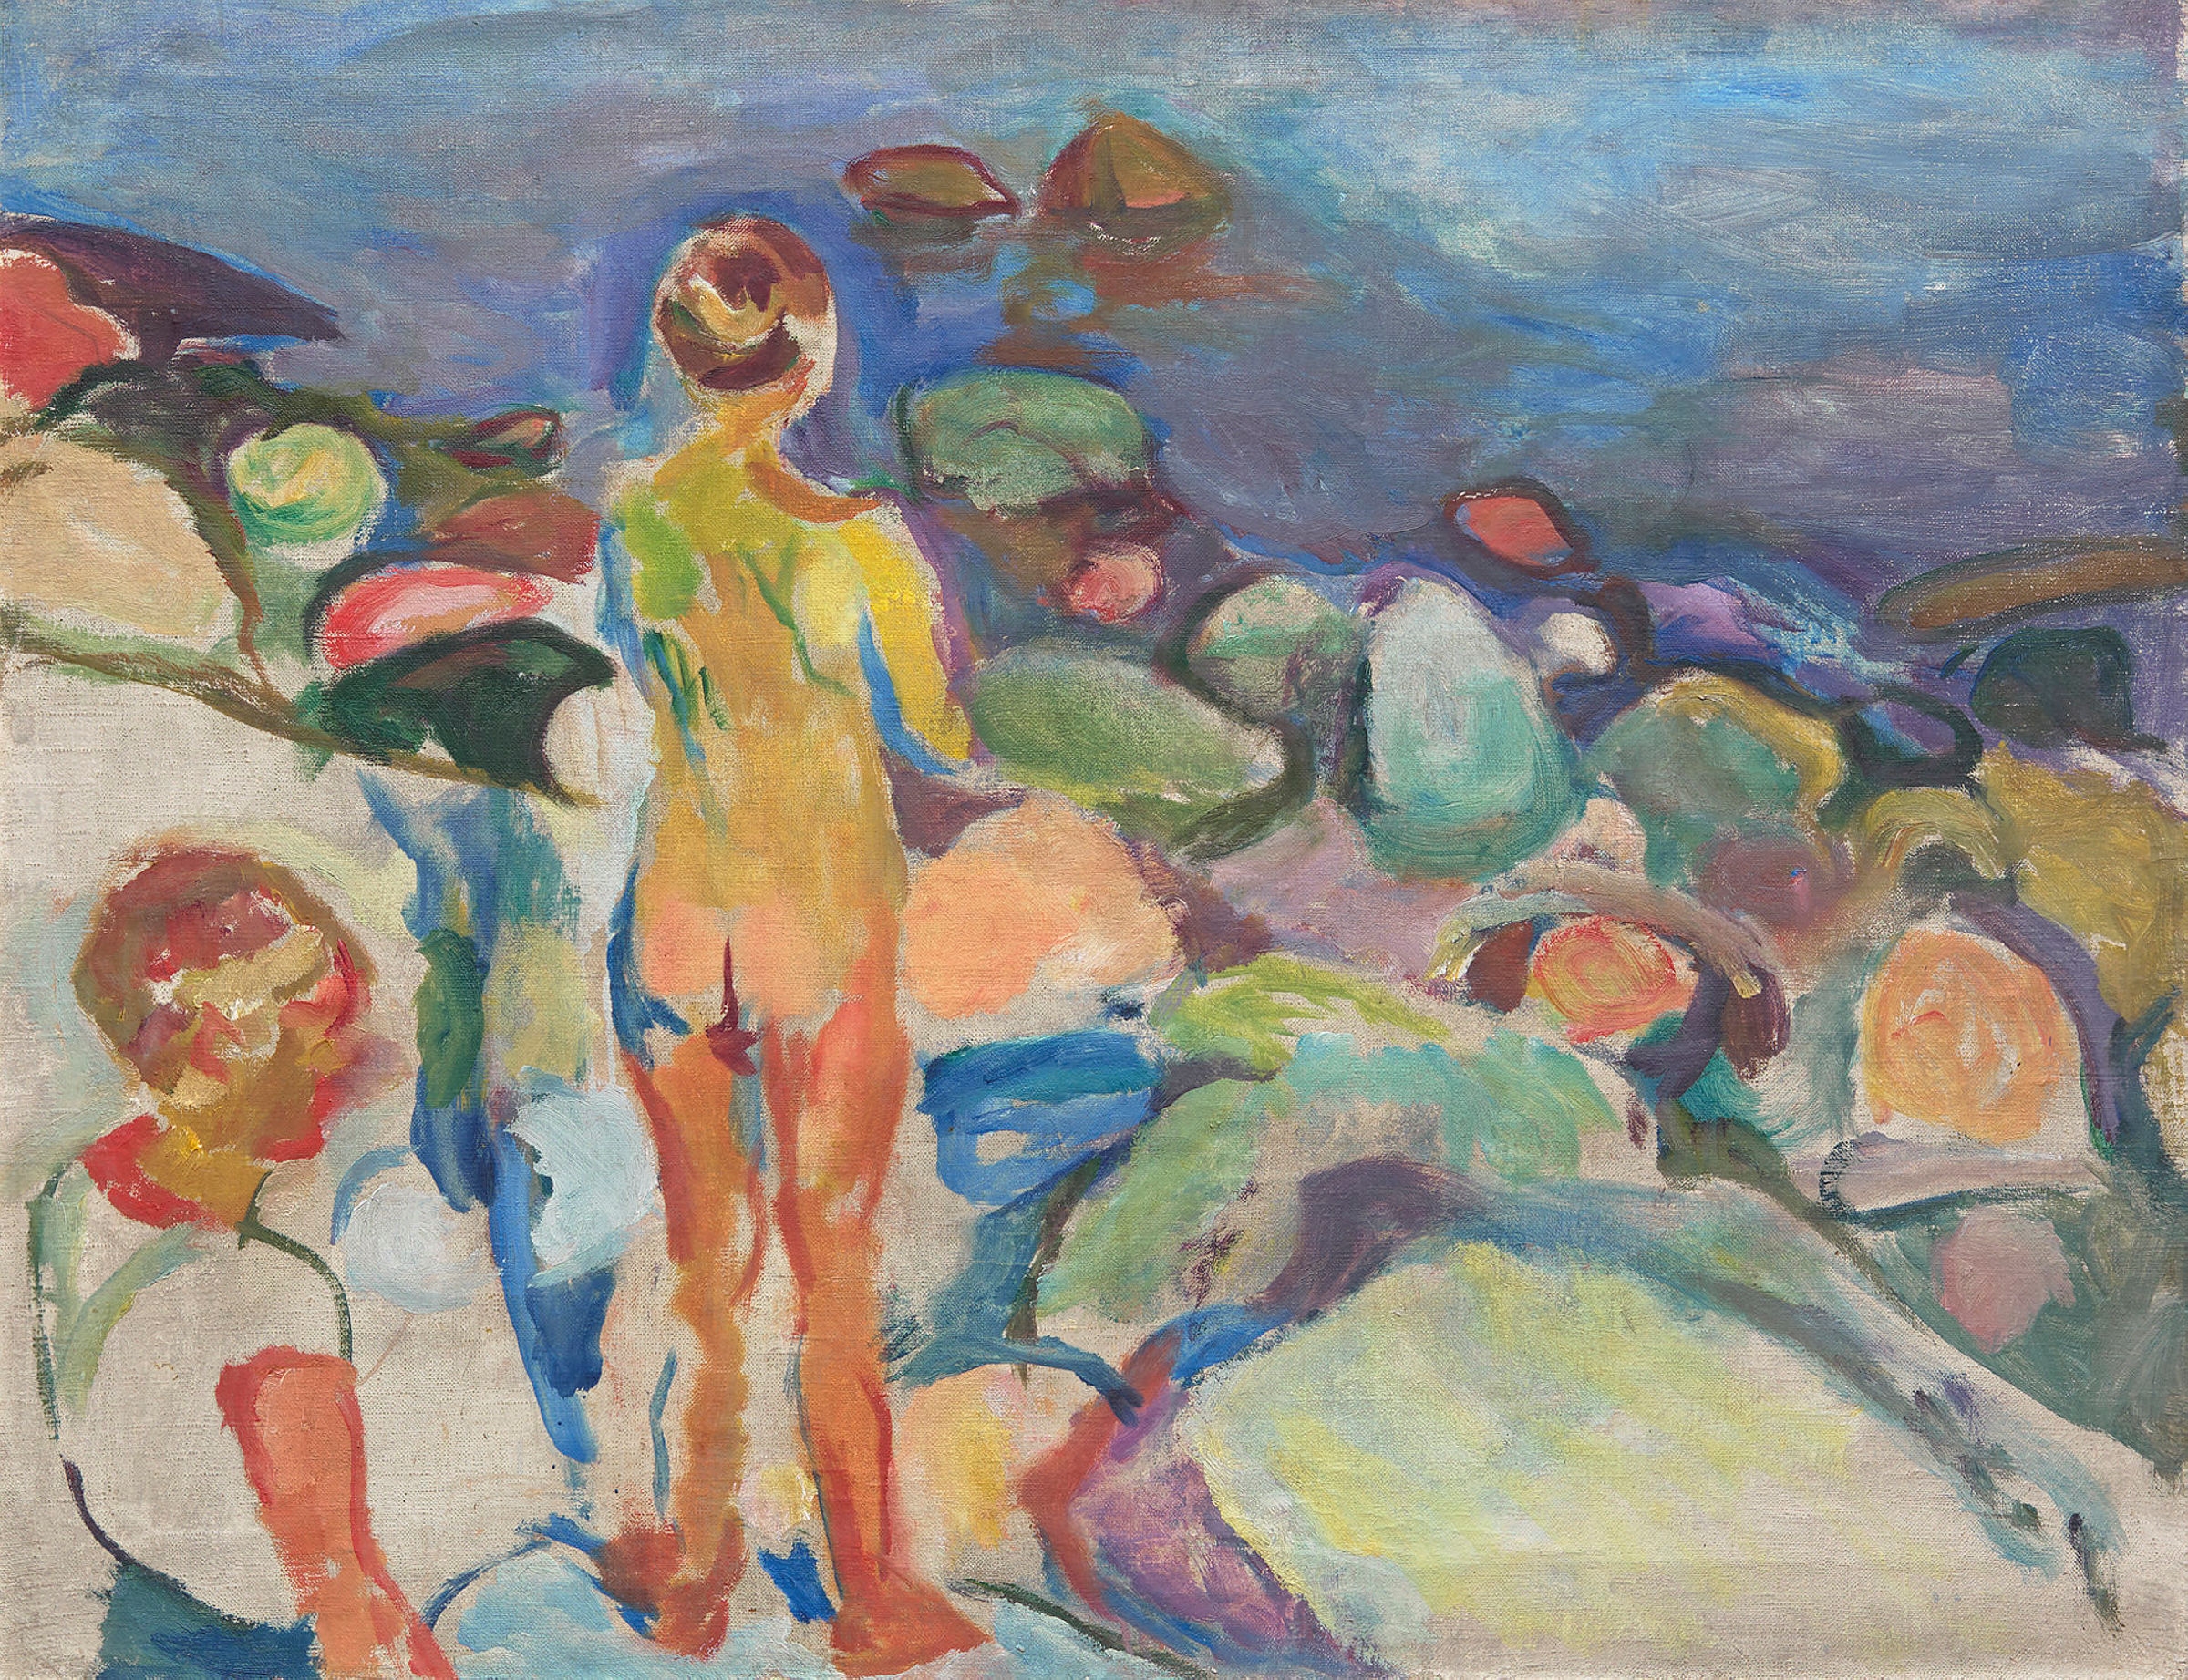 "Gutter på stranden" by Ludvig Peter Karsten, 1913